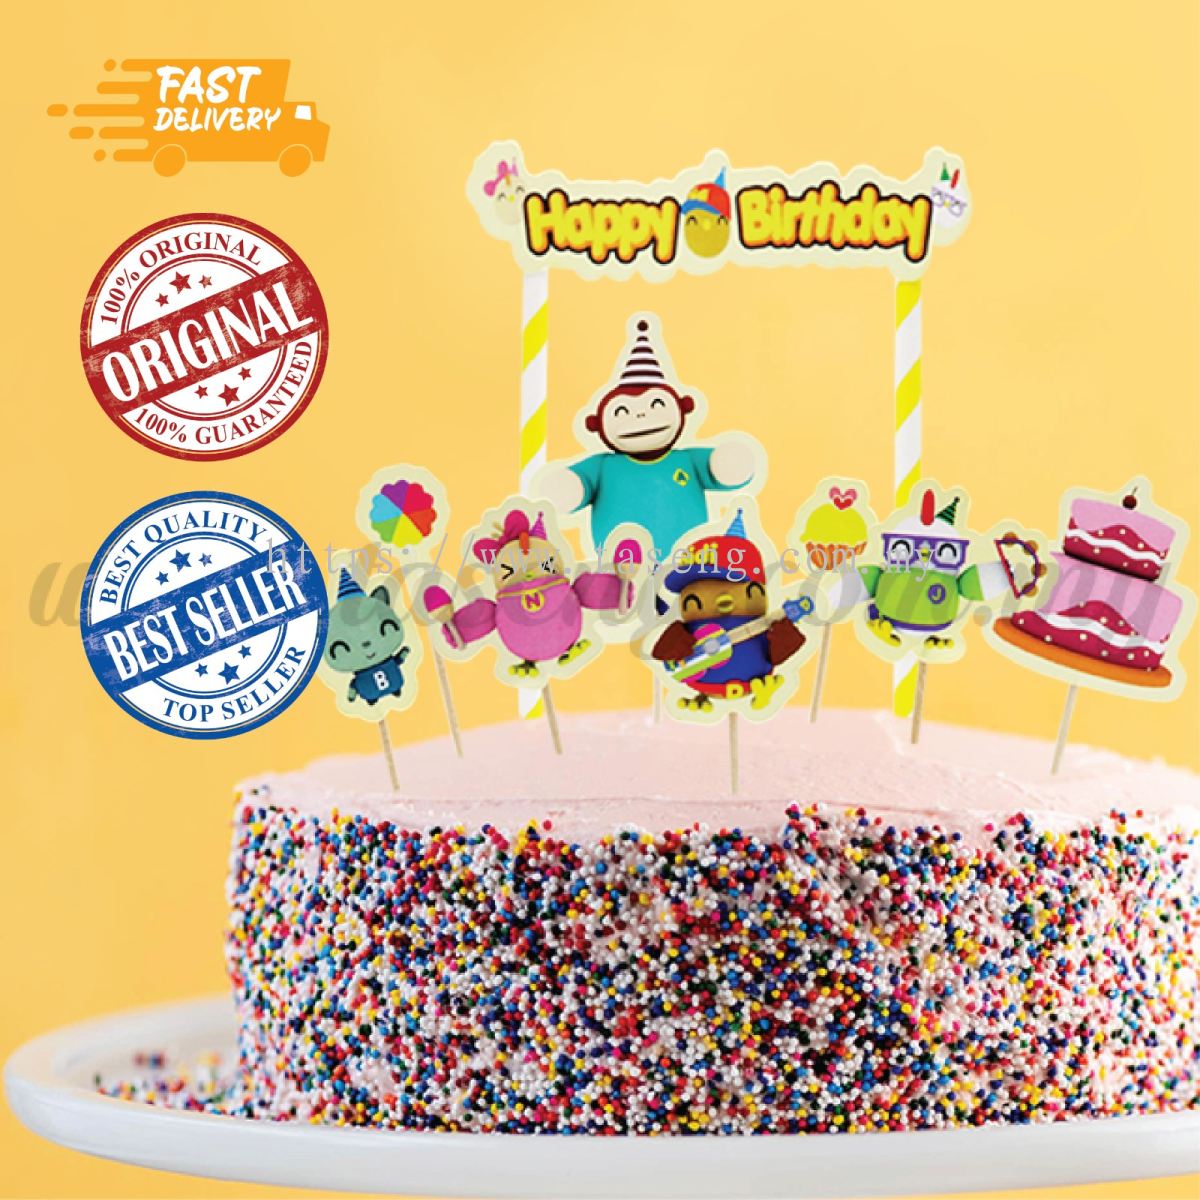 Birthday Cake Didi & Friends - Aisha Puchong Jaya